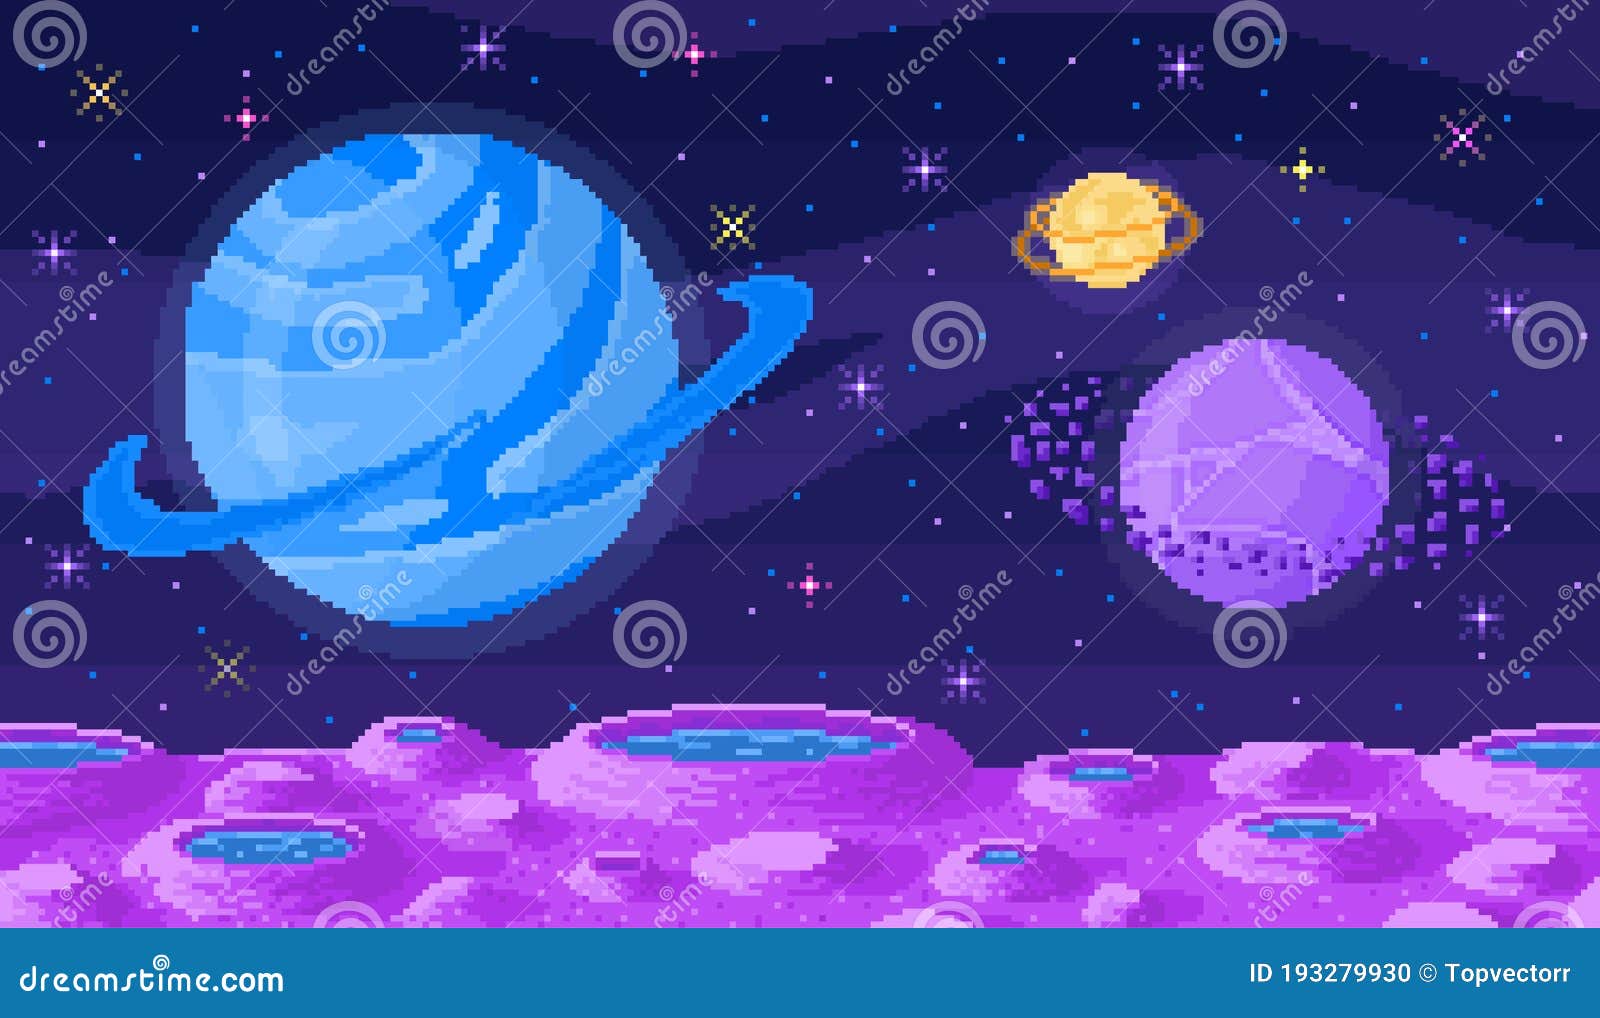 8 bit pixel planet stock illustrations 39 8 bit pixel planet stock illustrations vectors clipart dreamstime